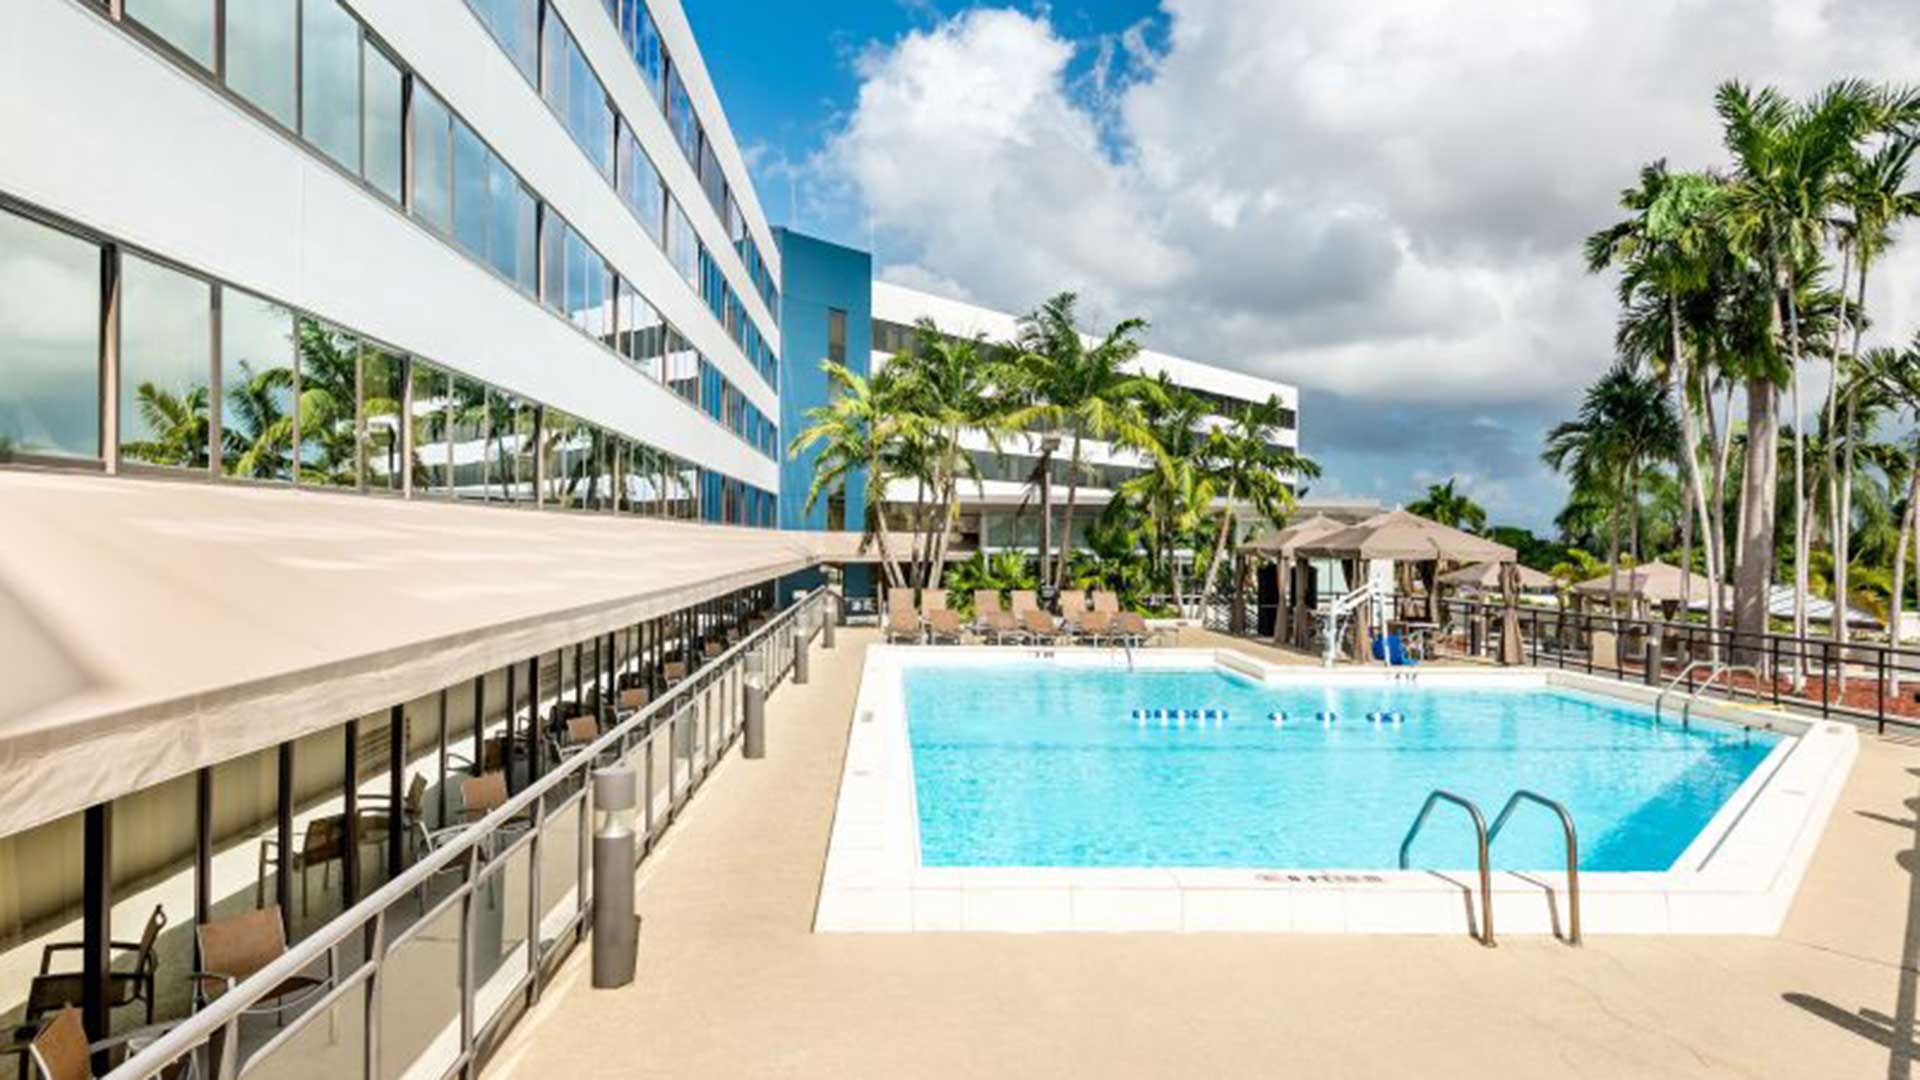 Sonesta-Miami-pool